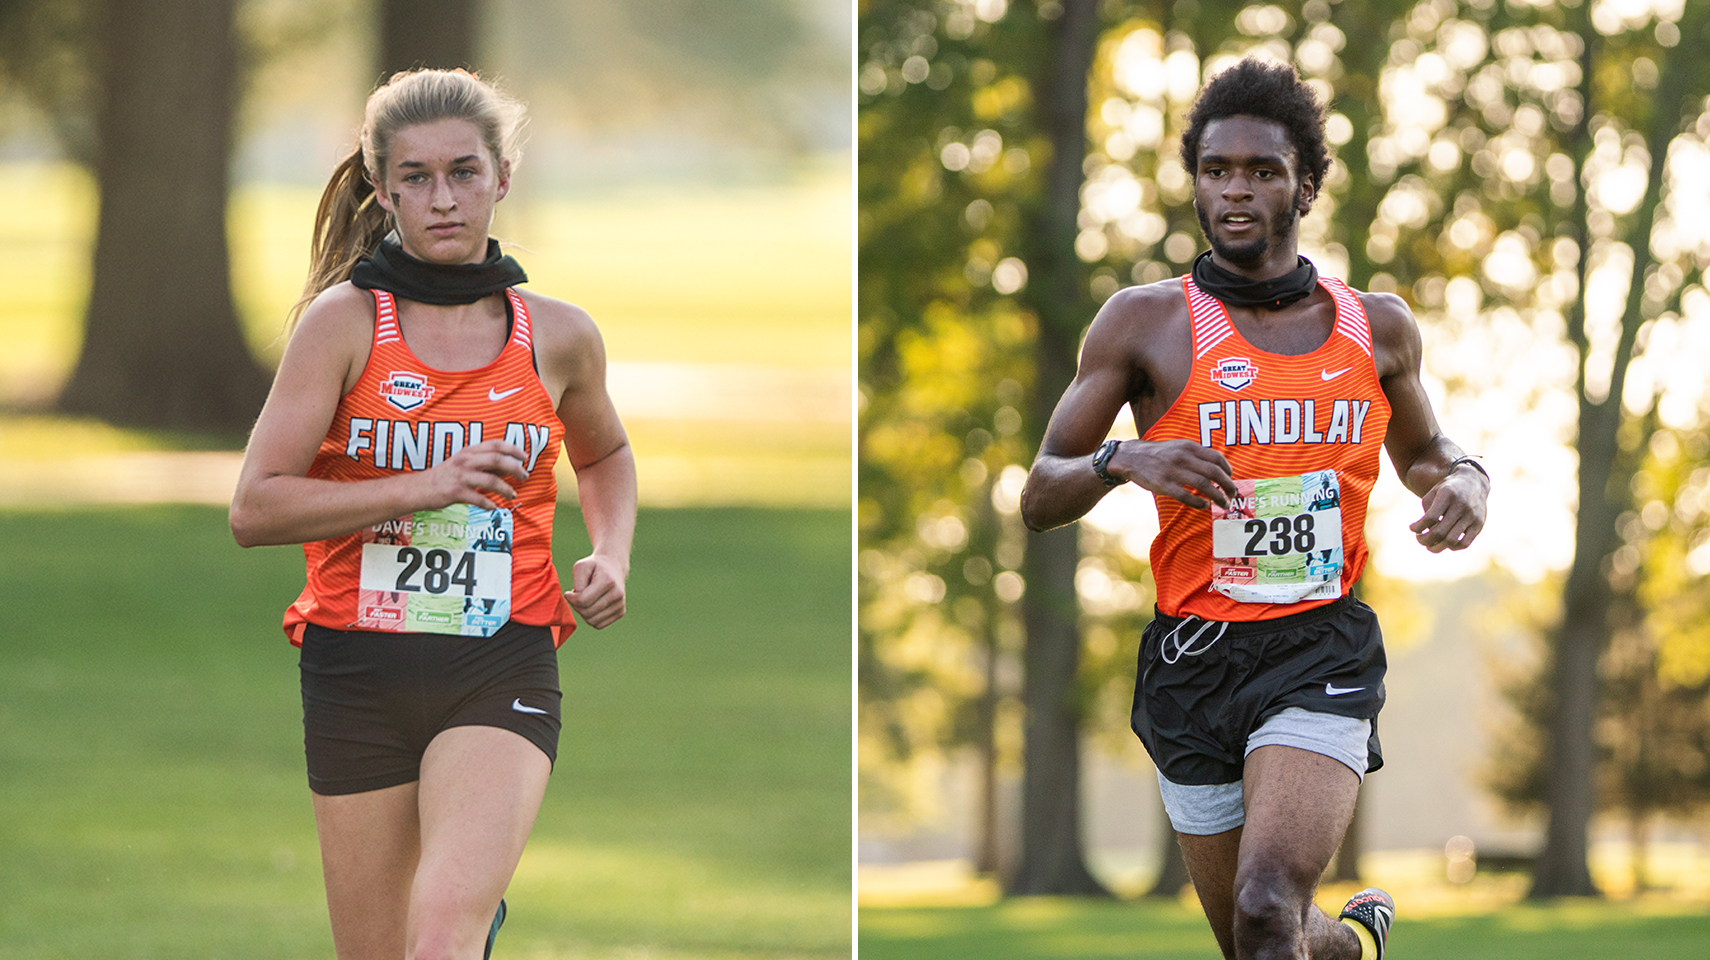 Female runner on left, picture of male runner on the right. Both in orange jerseys running on green grass.